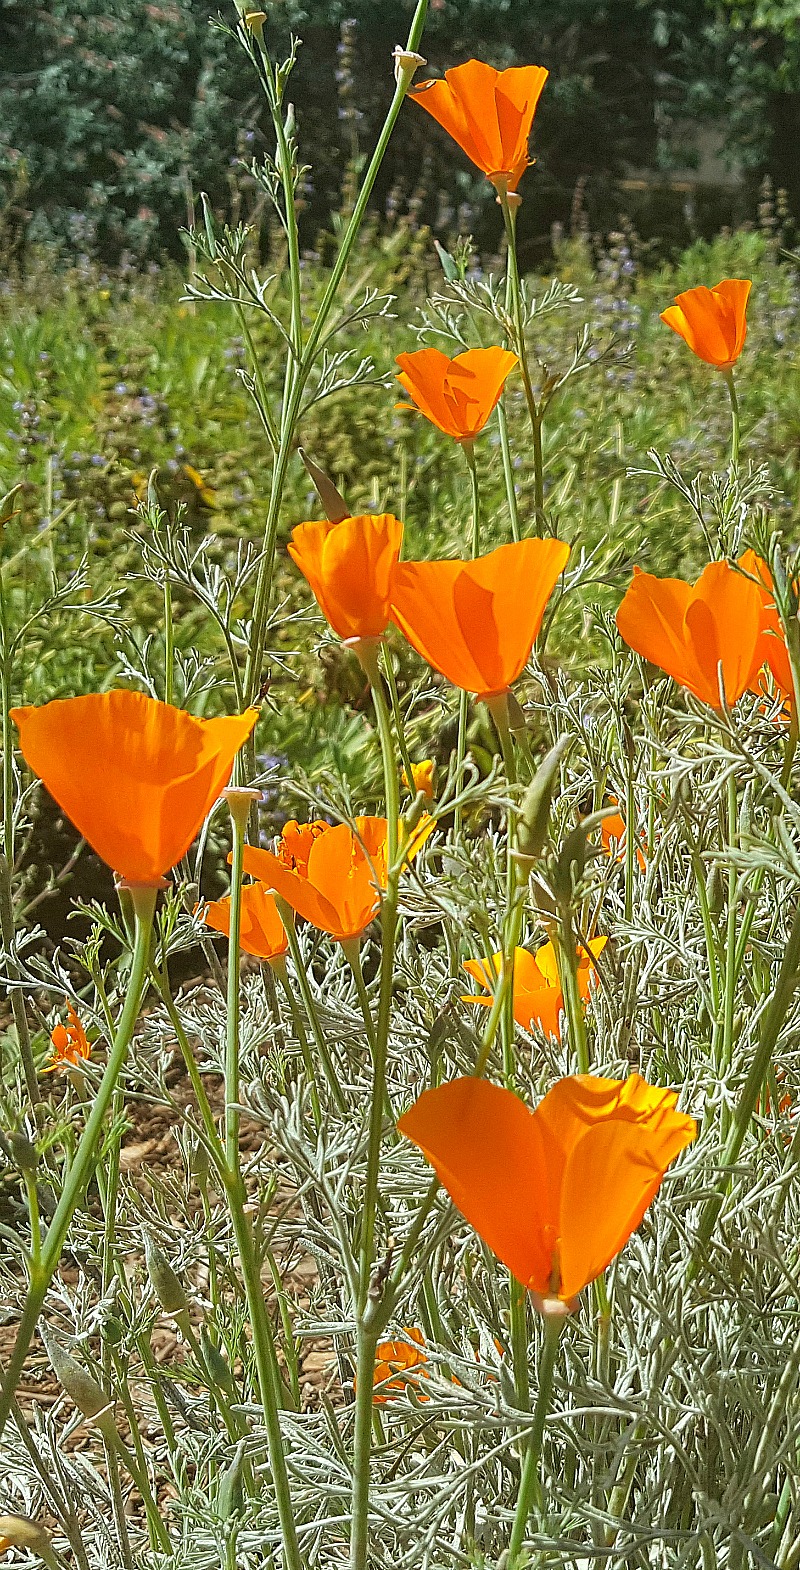 California Poppies - Wildflowers at Rancho Santa Ana Botanic Garden in Claremont